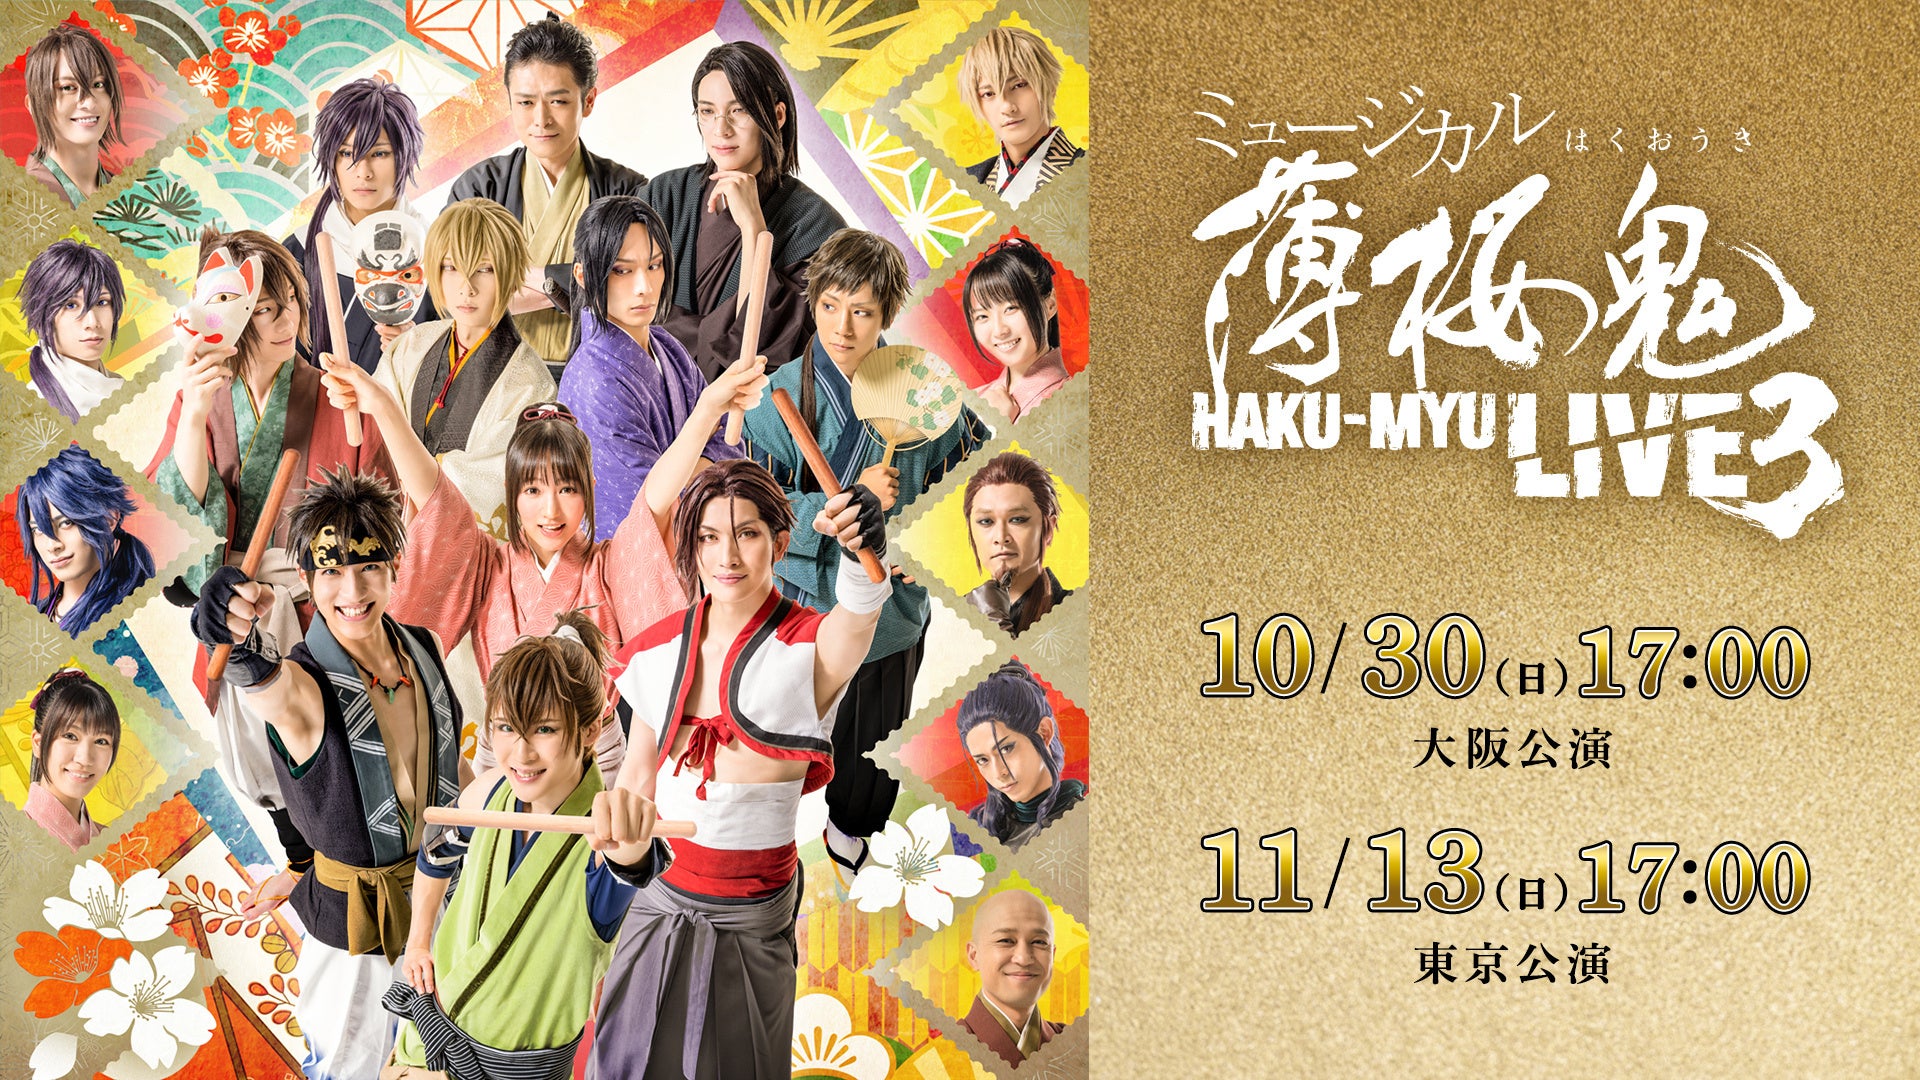 「HAKU-MYU LIVE」の第3弾 ミュージカル『薄桜鬼』HAKU-MYU LIVE 3 10/30(日) 大阪公演、11/13(日) 東京公演 Paraviで独占LIVE配信決定